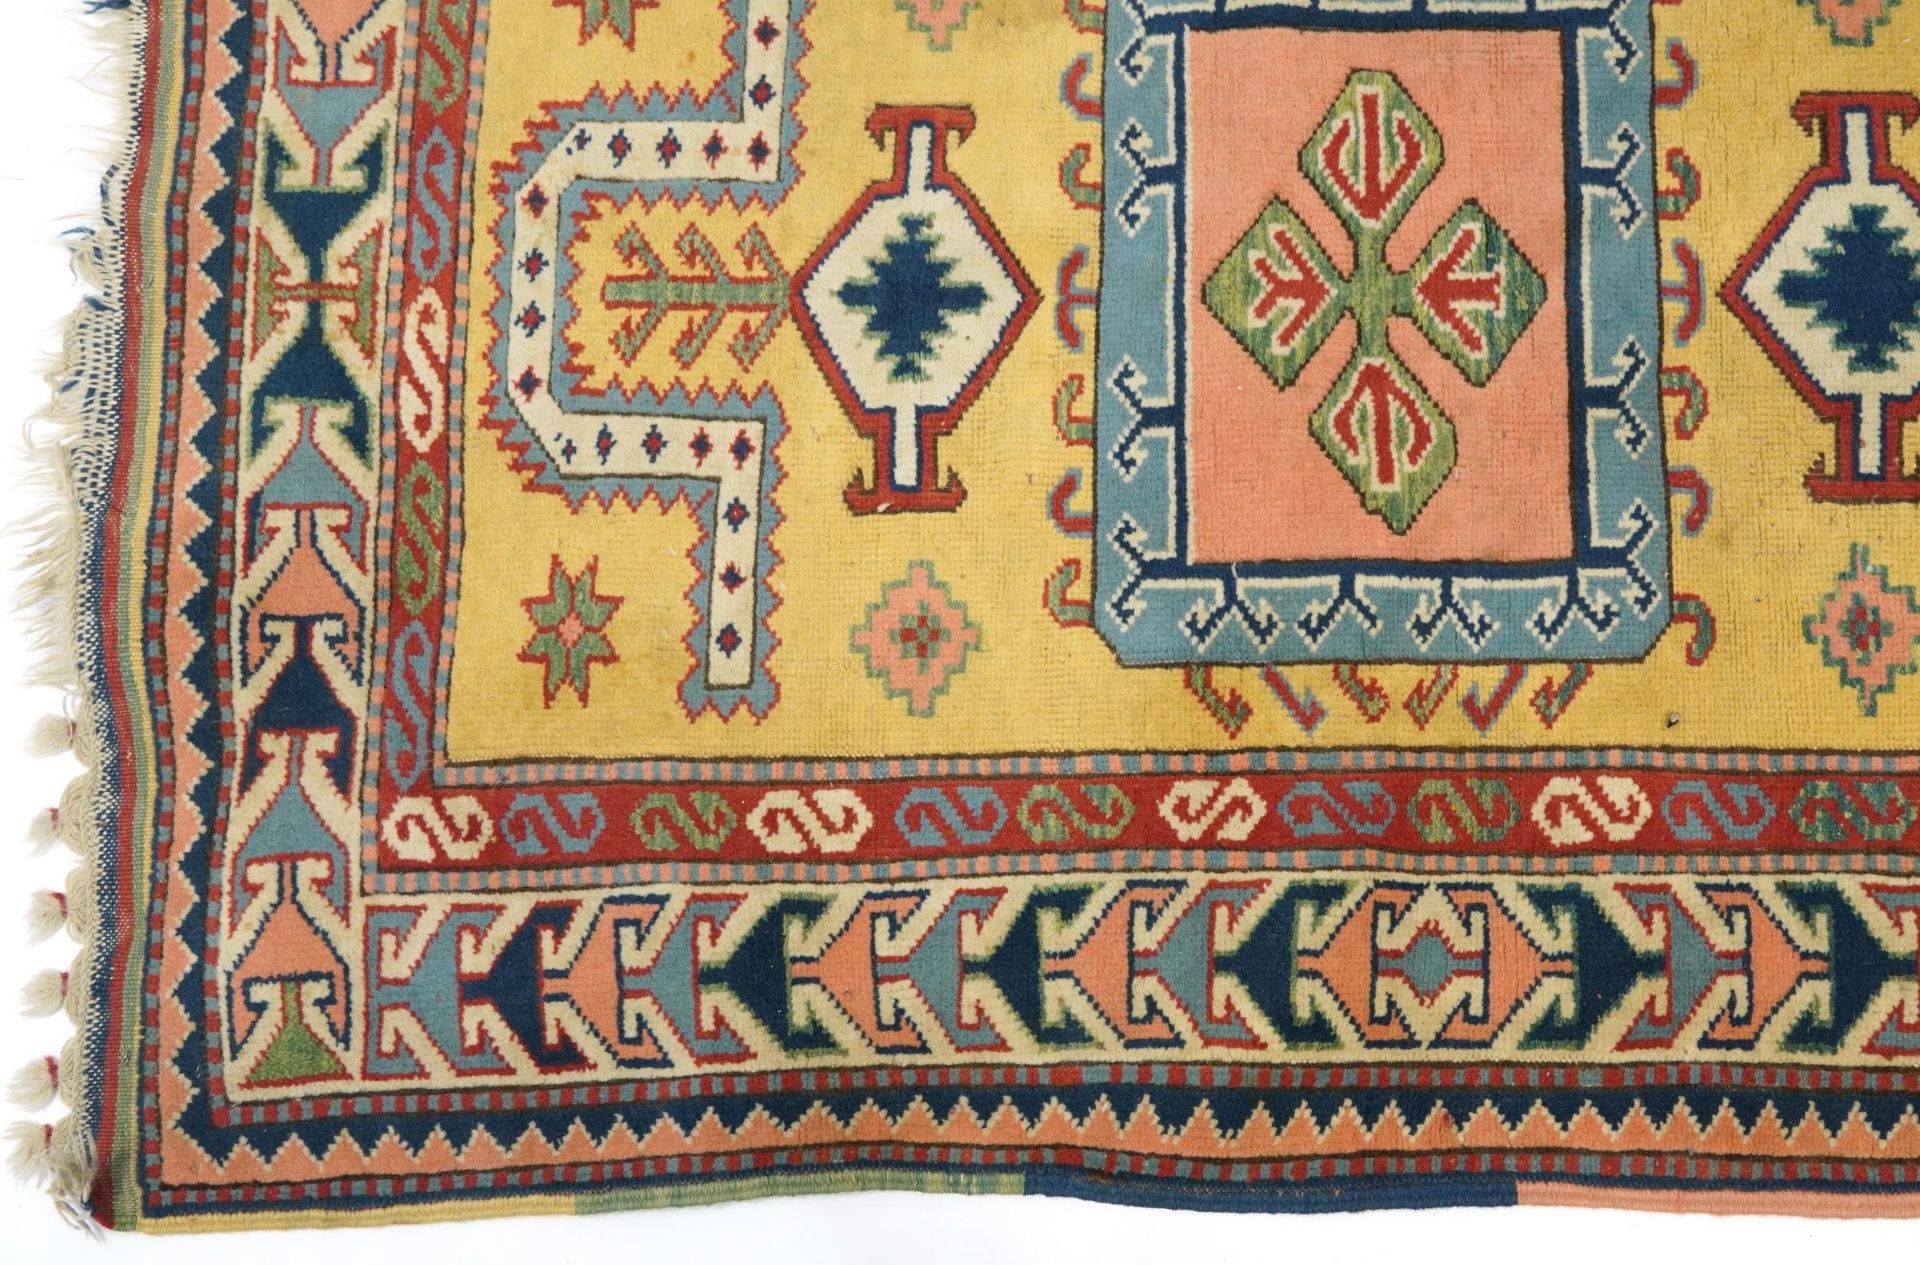 Rectangular Turkish kilim rug having and allover traditional design, 185cm x 125cm - Image 4 of 7